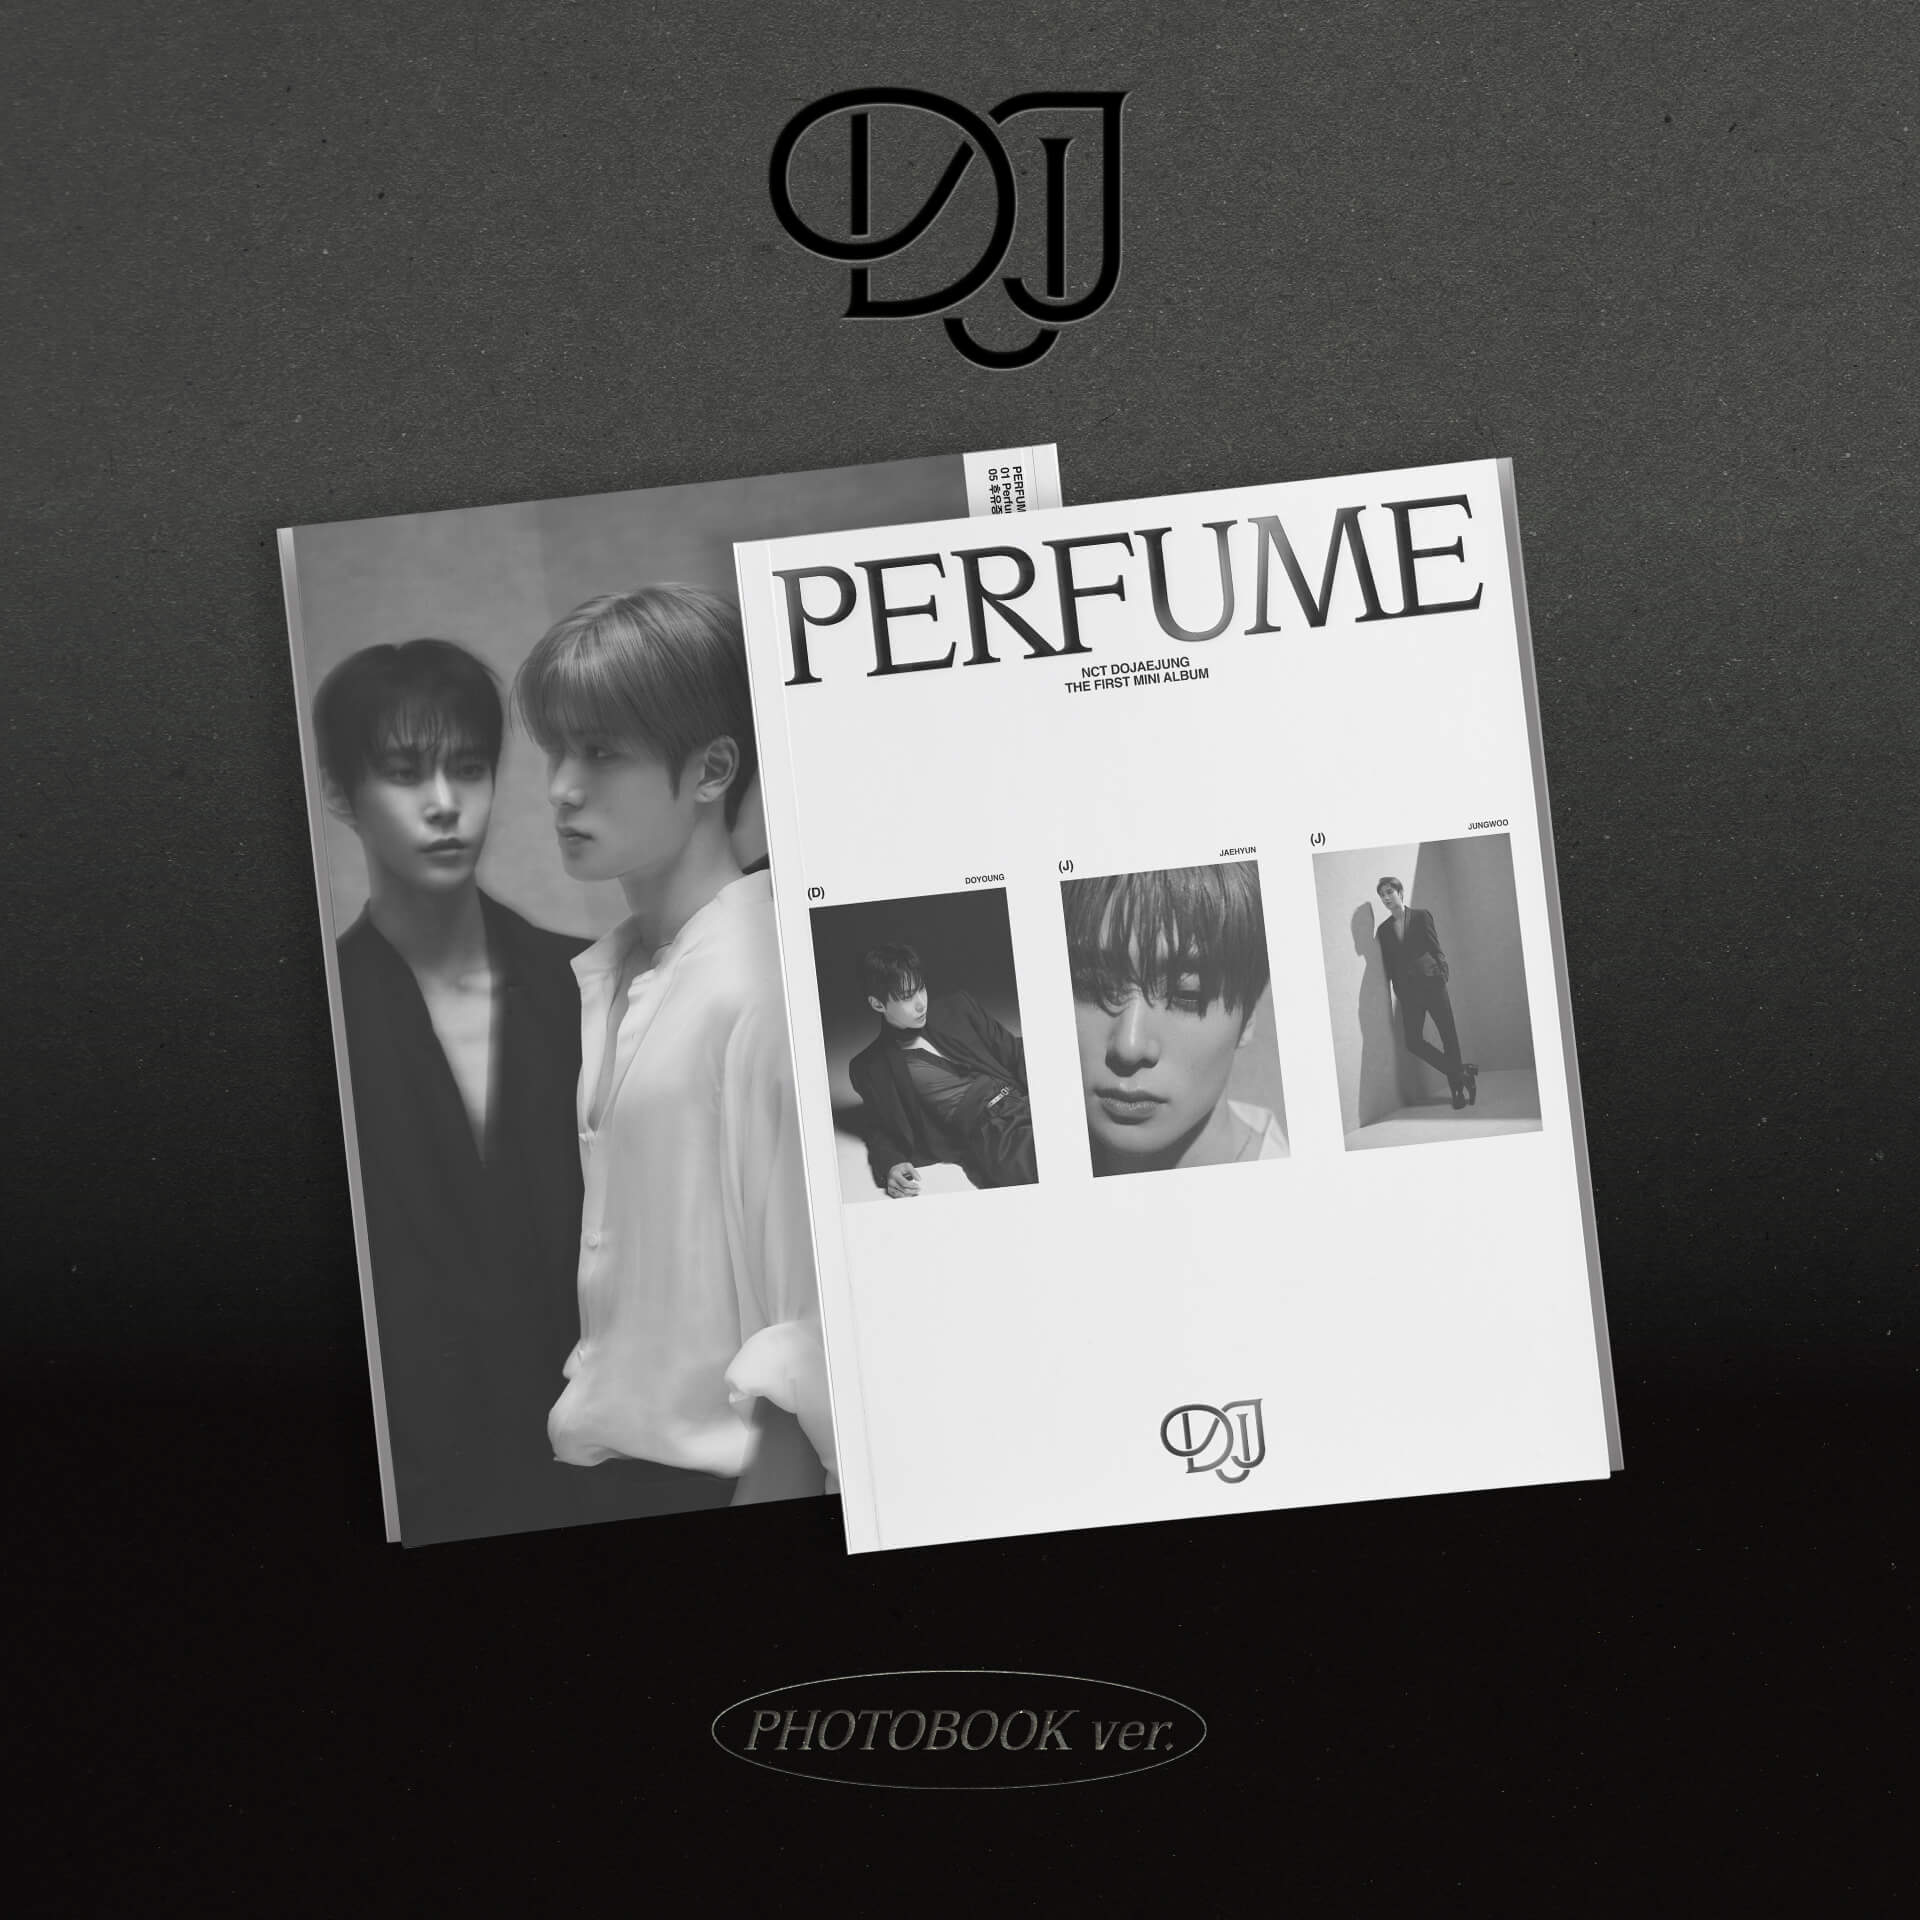 NCT DOJAEJUNG 1st Mini Album Perfume - Photobook Version